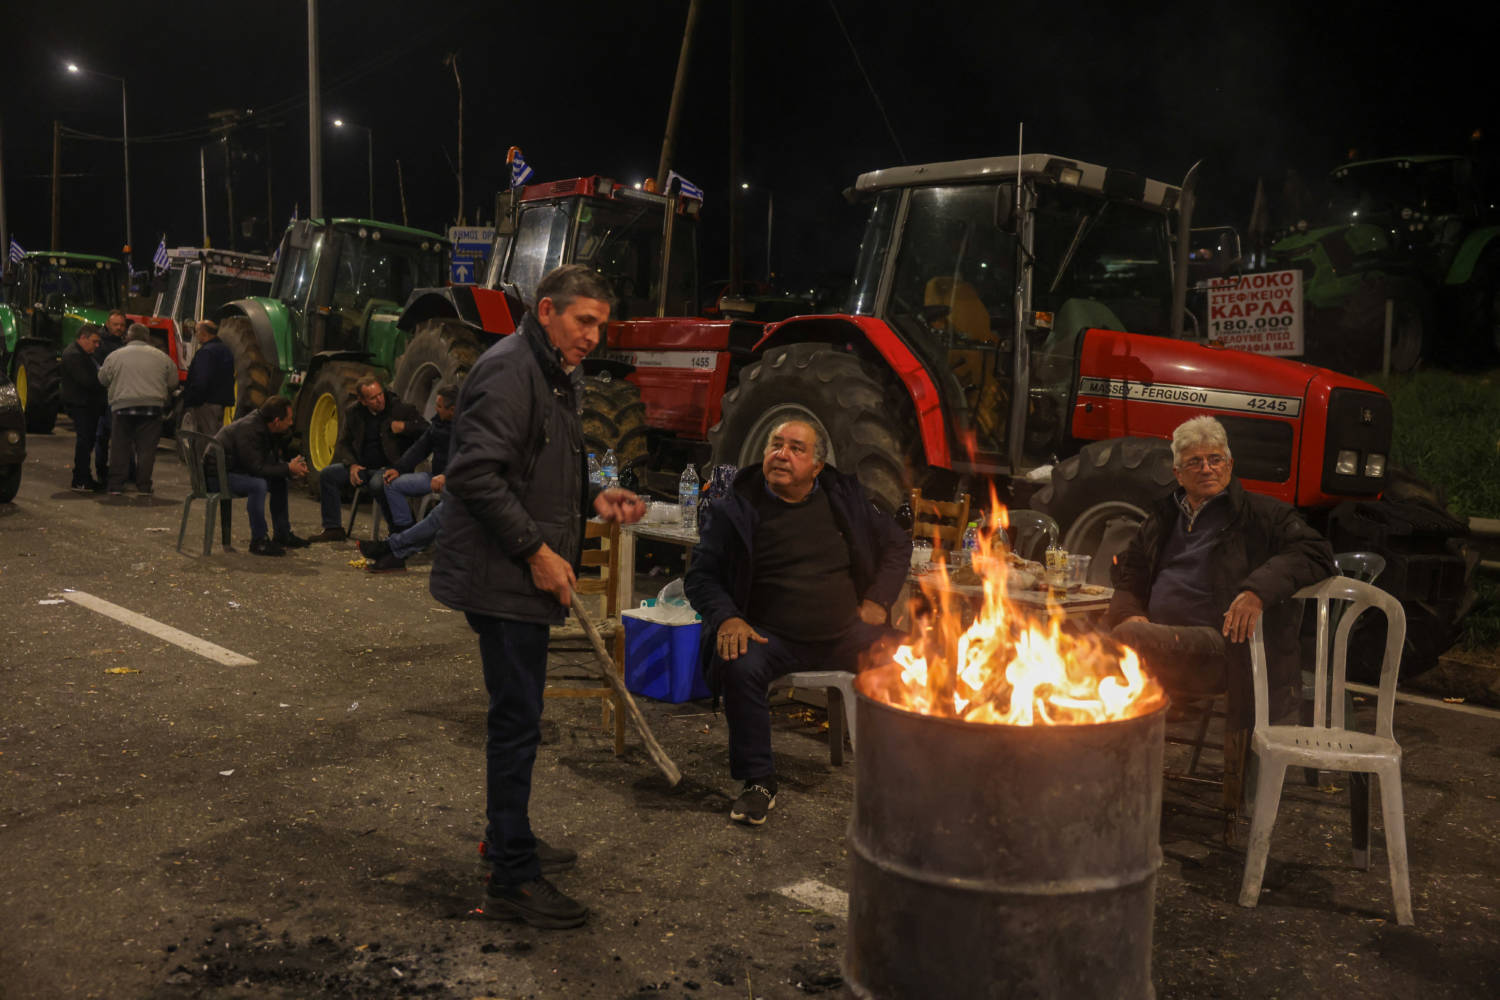 Farmers Protest, In Greece